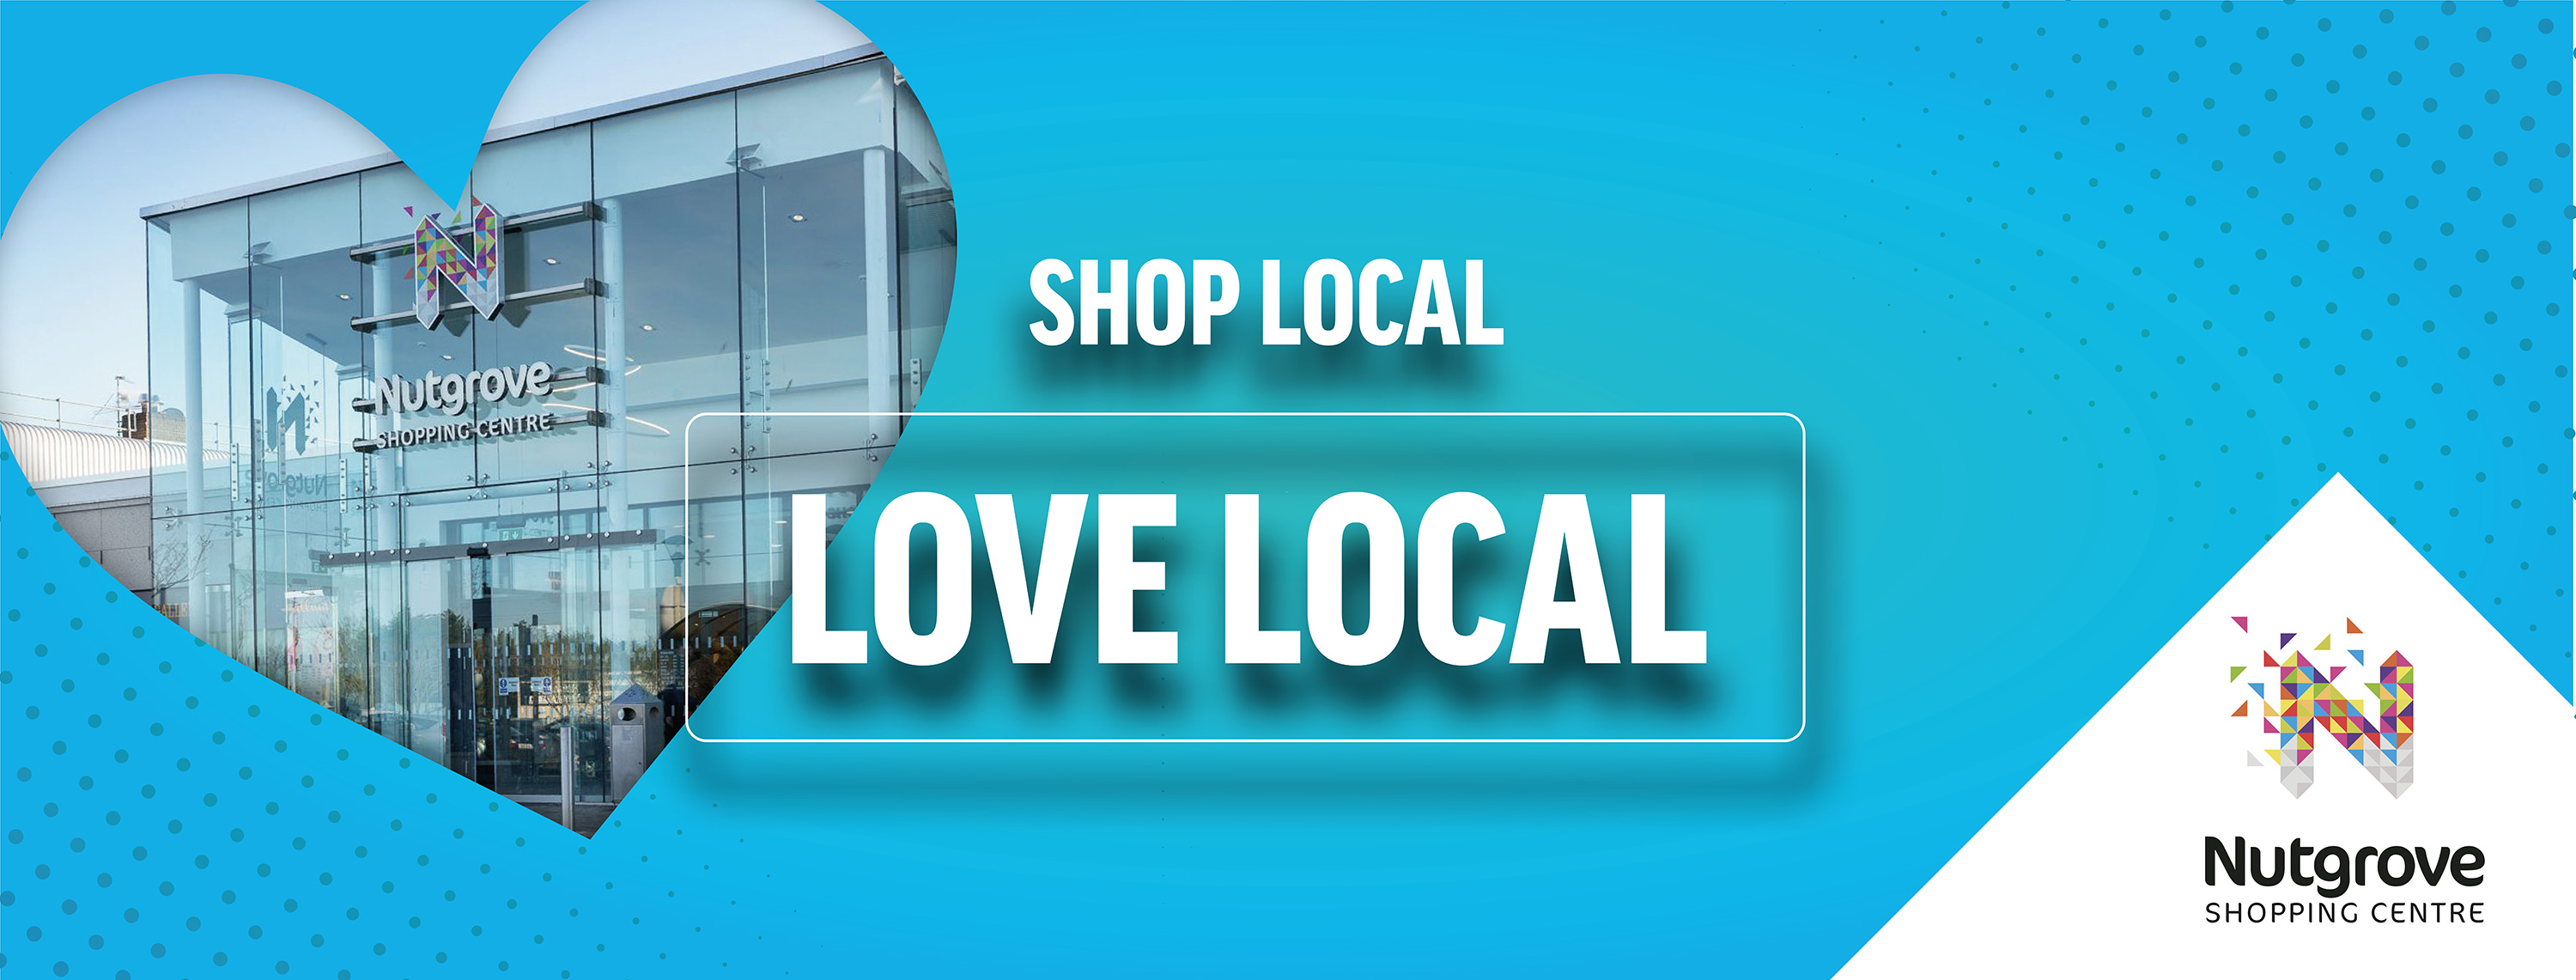 Shop Local Love Local at Nutgrove Shopping Centre